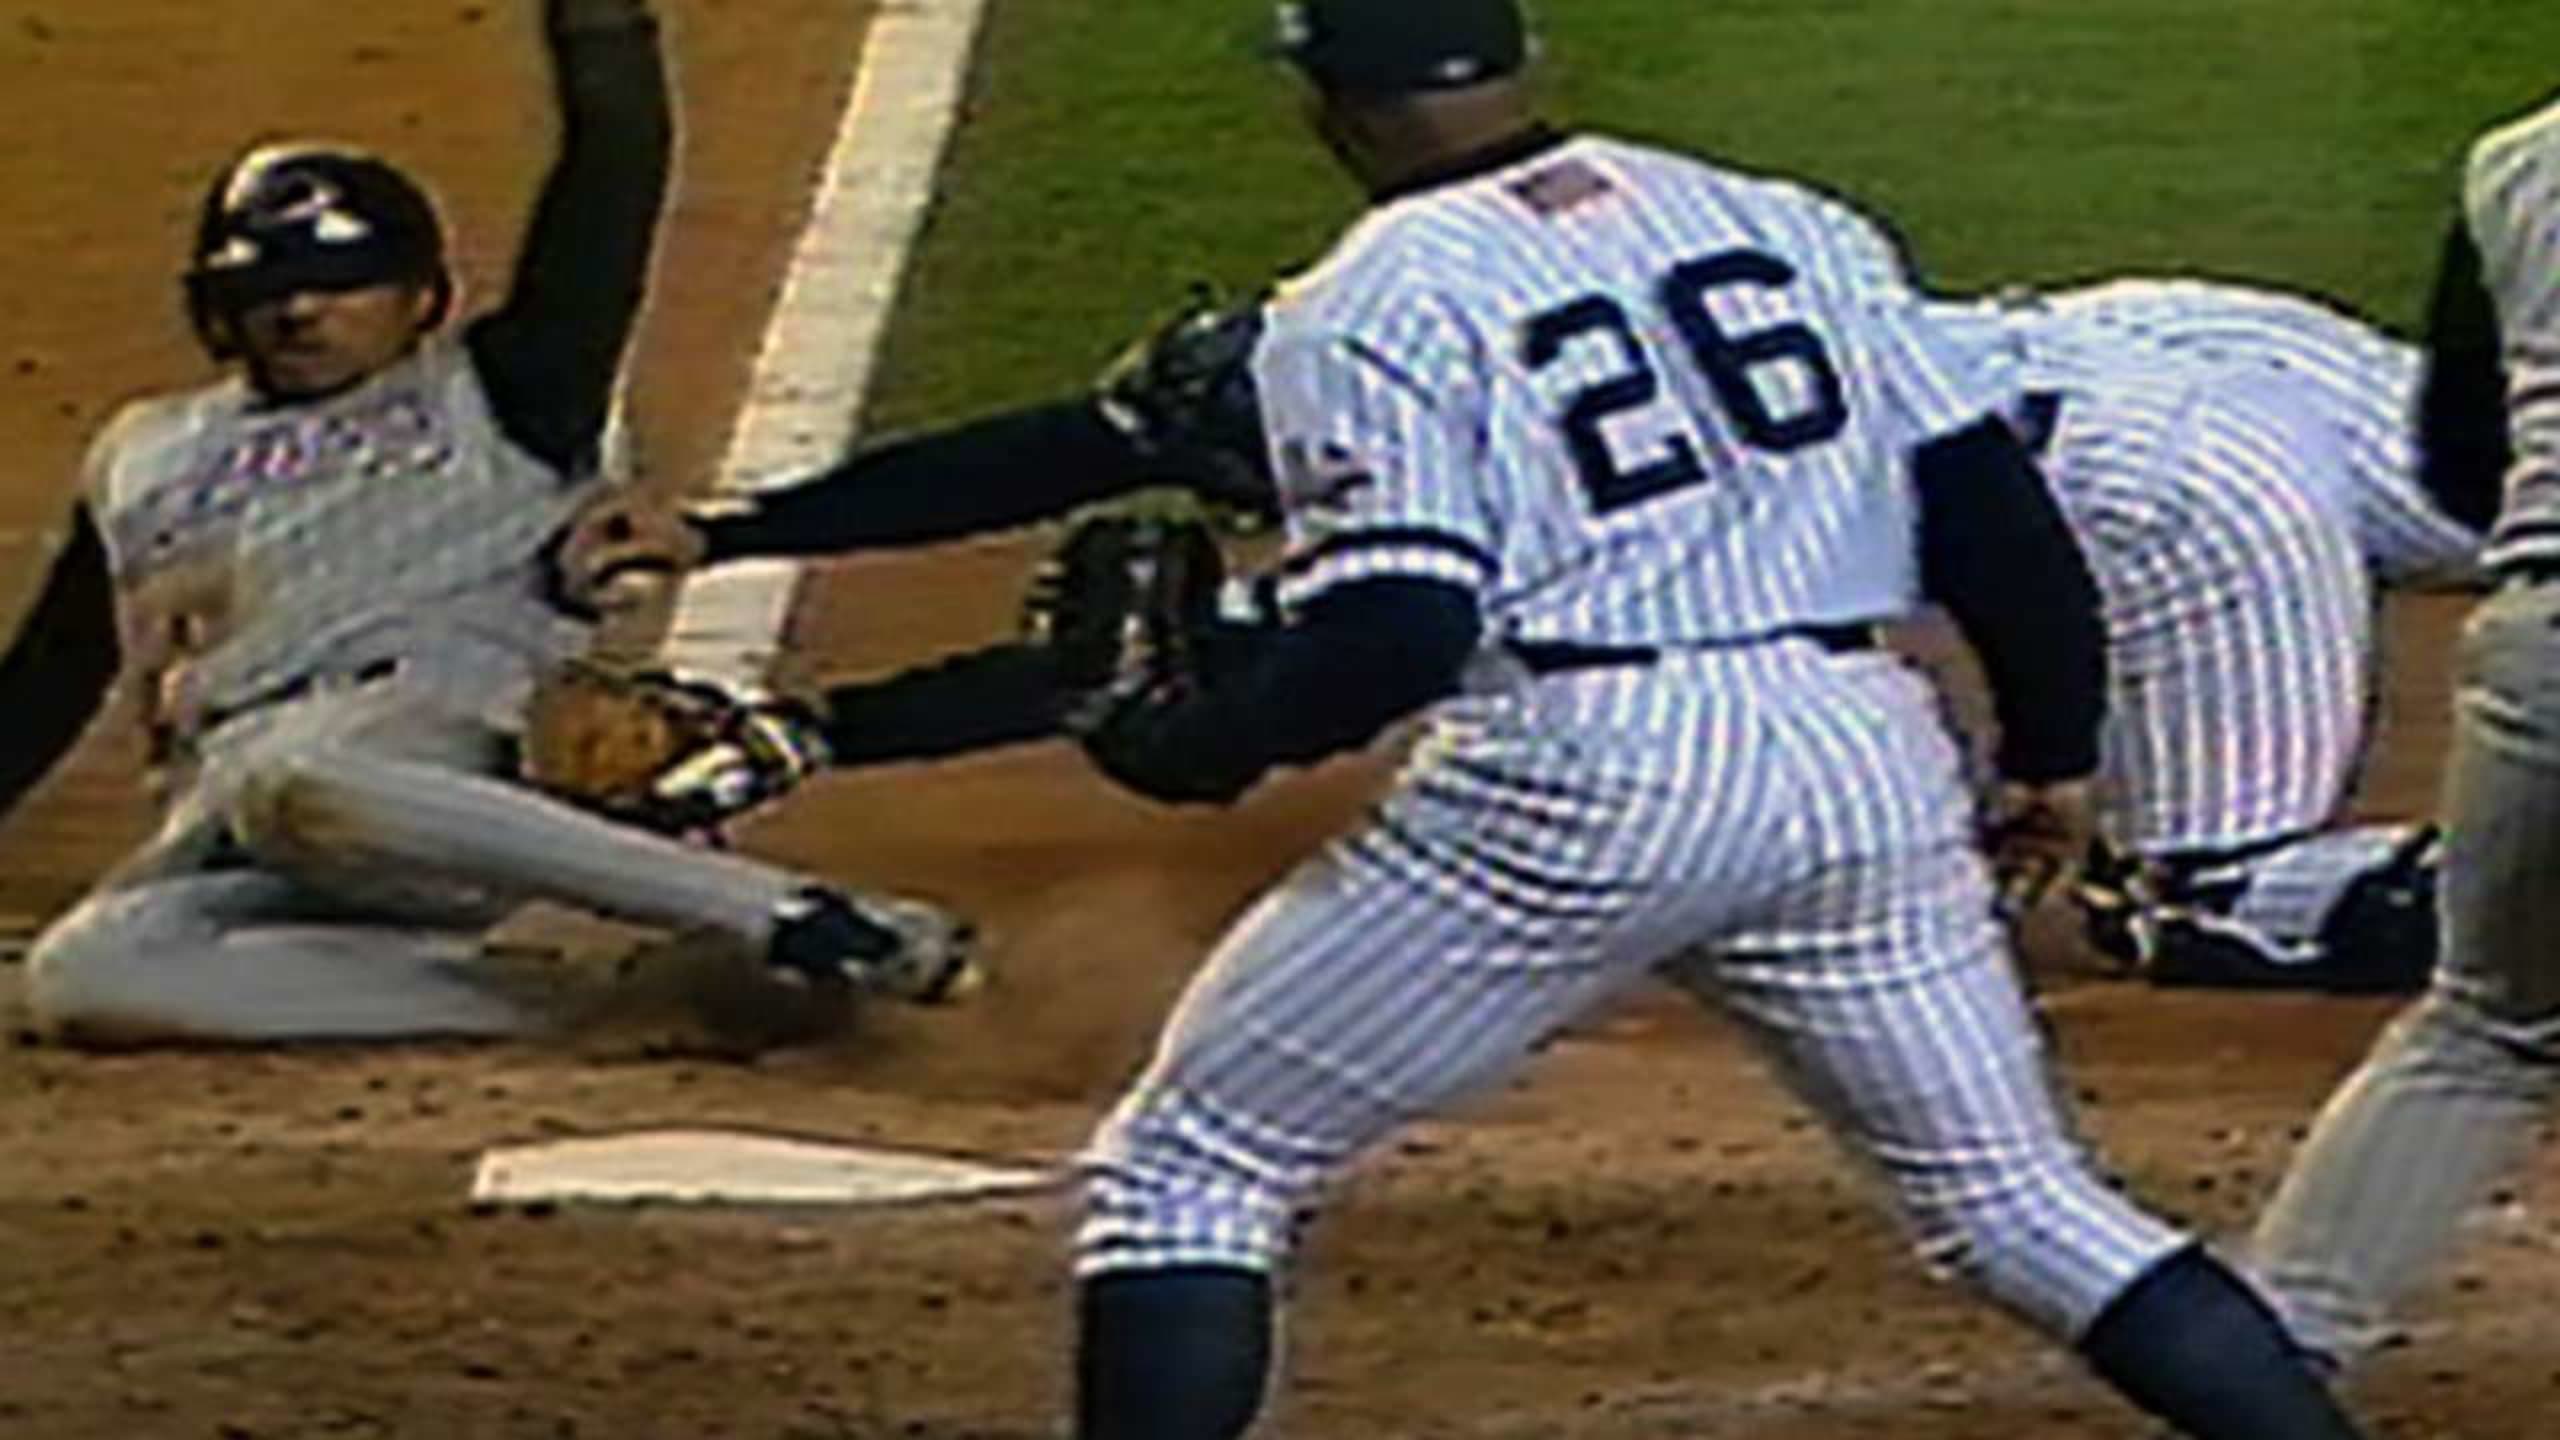 Best Yankees Playoff Games of Past 25 Years: Tino Martinez's grand slam -  Pinstripe Alley